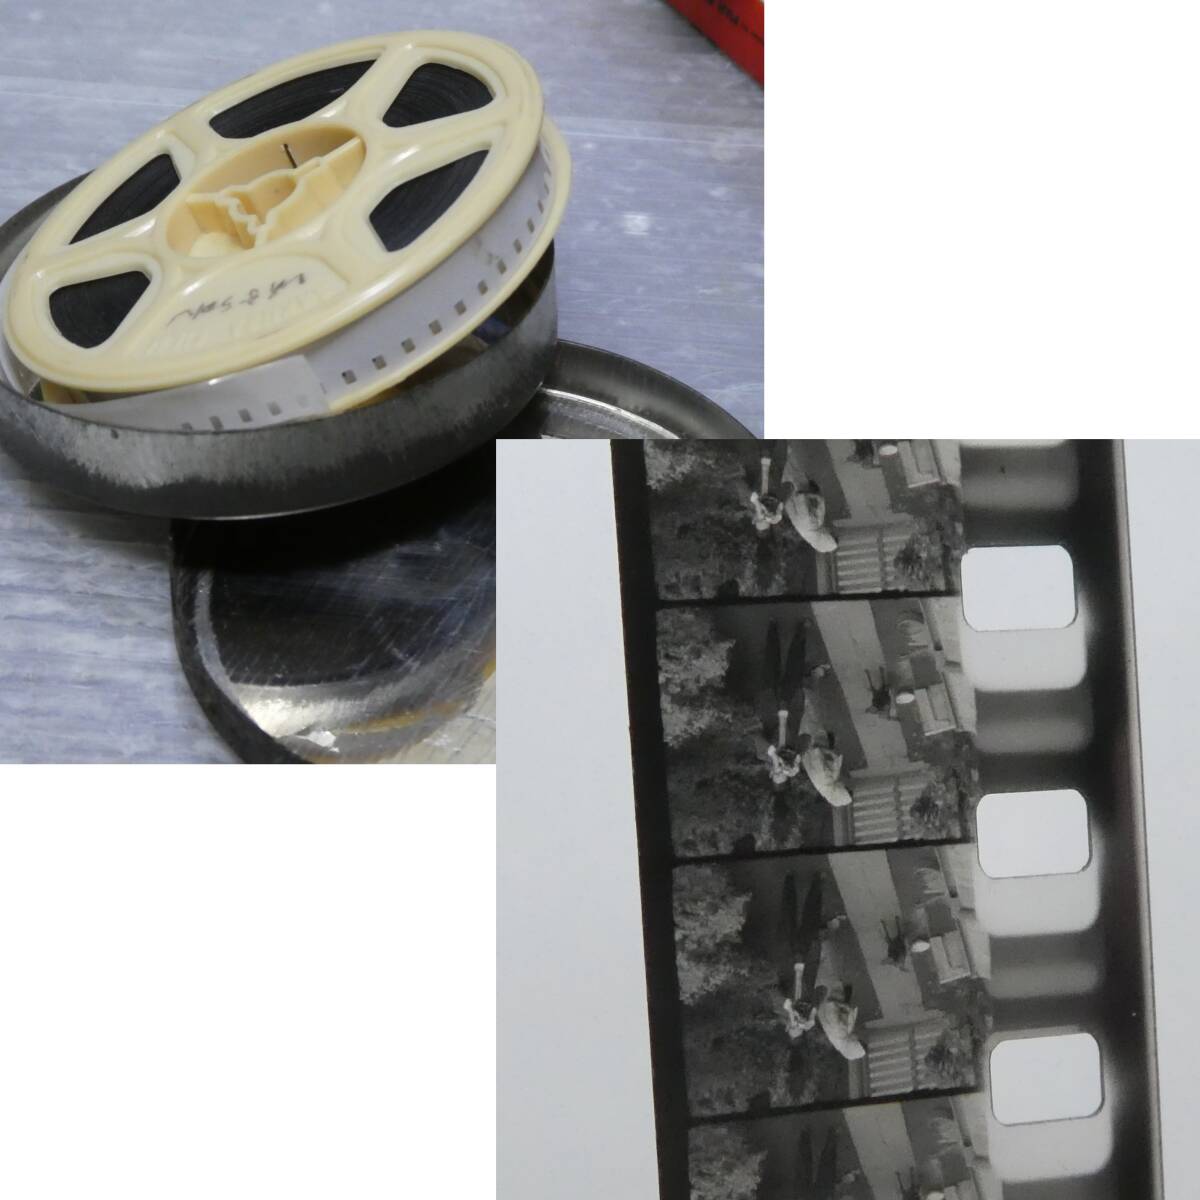  film ( compact ) camera (606) photographing settled 8mm film NEOPAN SAKURAFILM FUJIFILM Junk set 